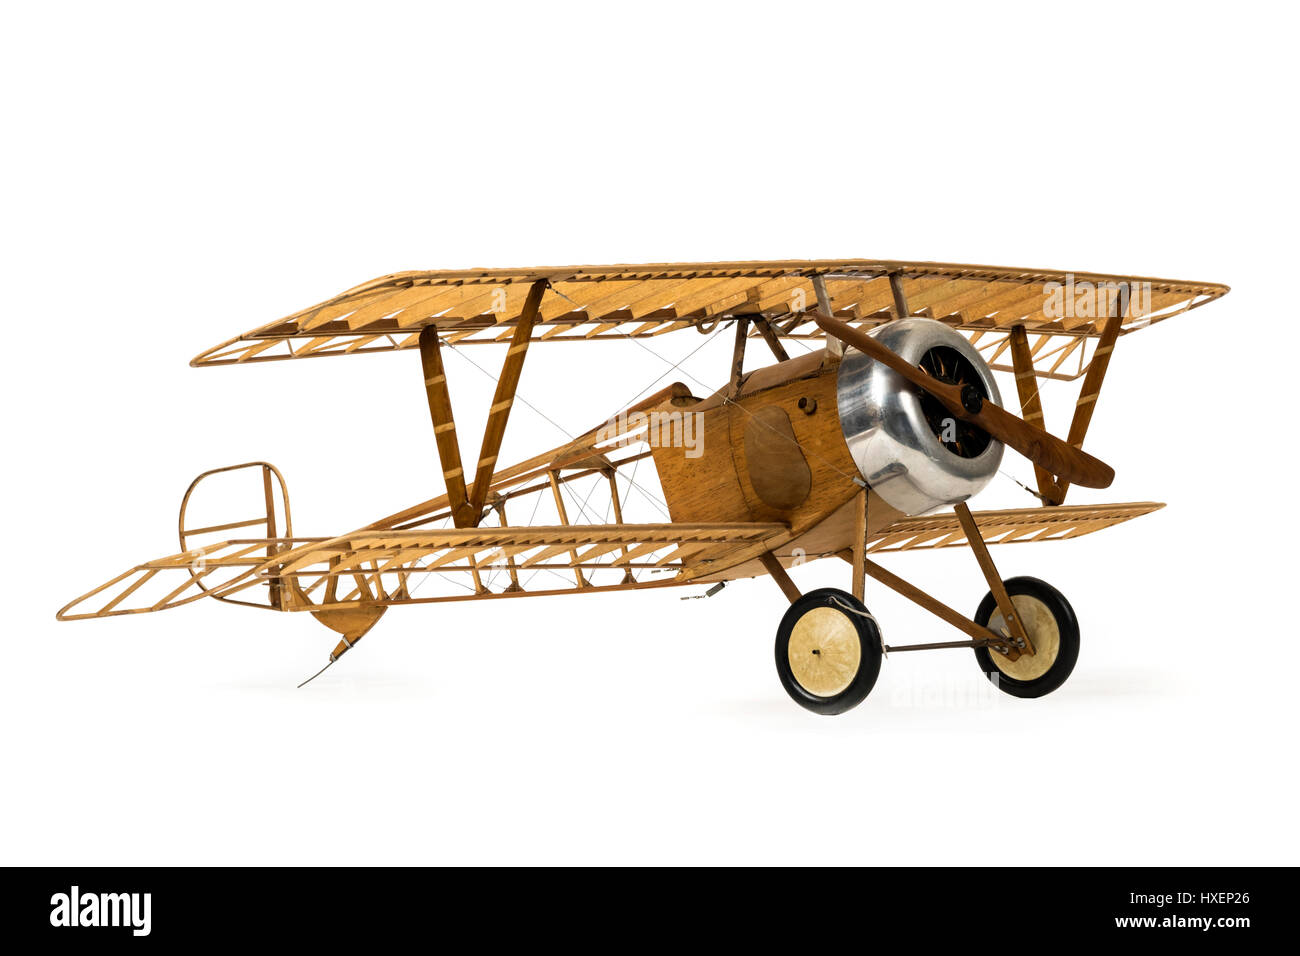 Jahrgang 1:6 Maßstab Rahmenmodell von einem Kampfflugzeug WW1 RFC (Royal Flying Corps) komplett mit Williams Brothers Le Rhone Motor. Stockfoto